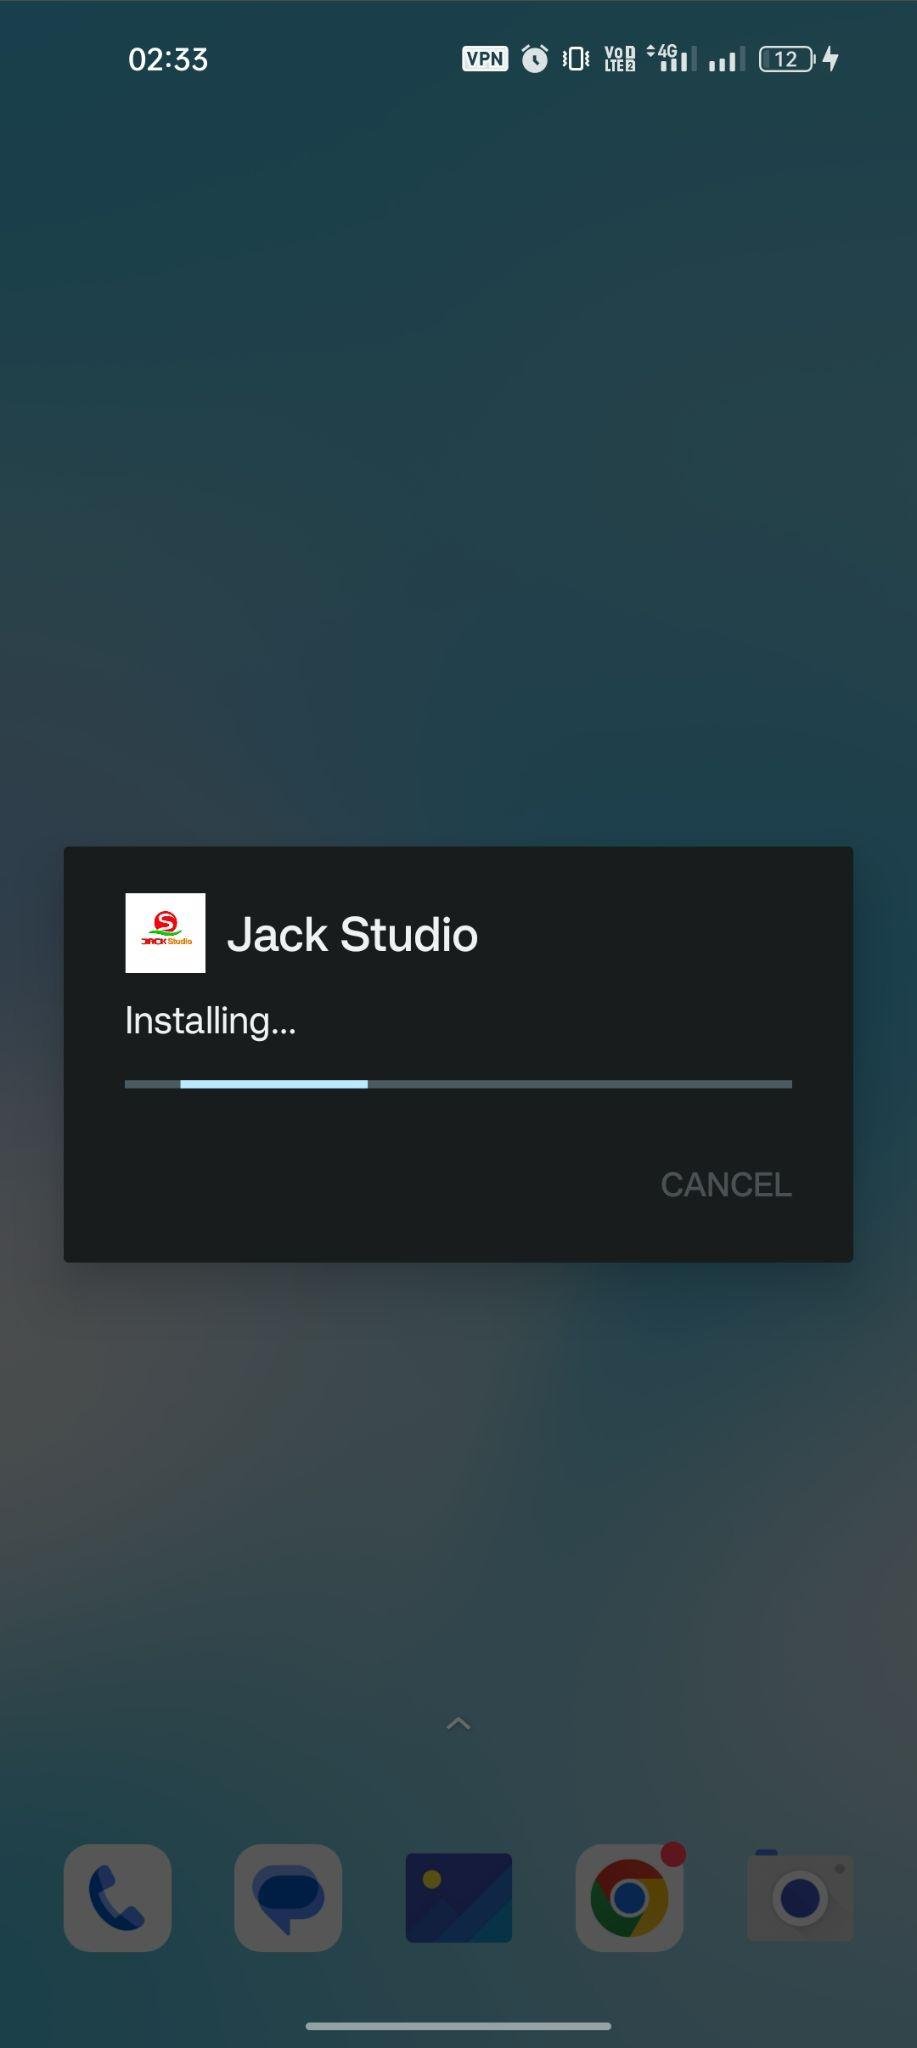 Jock Studio